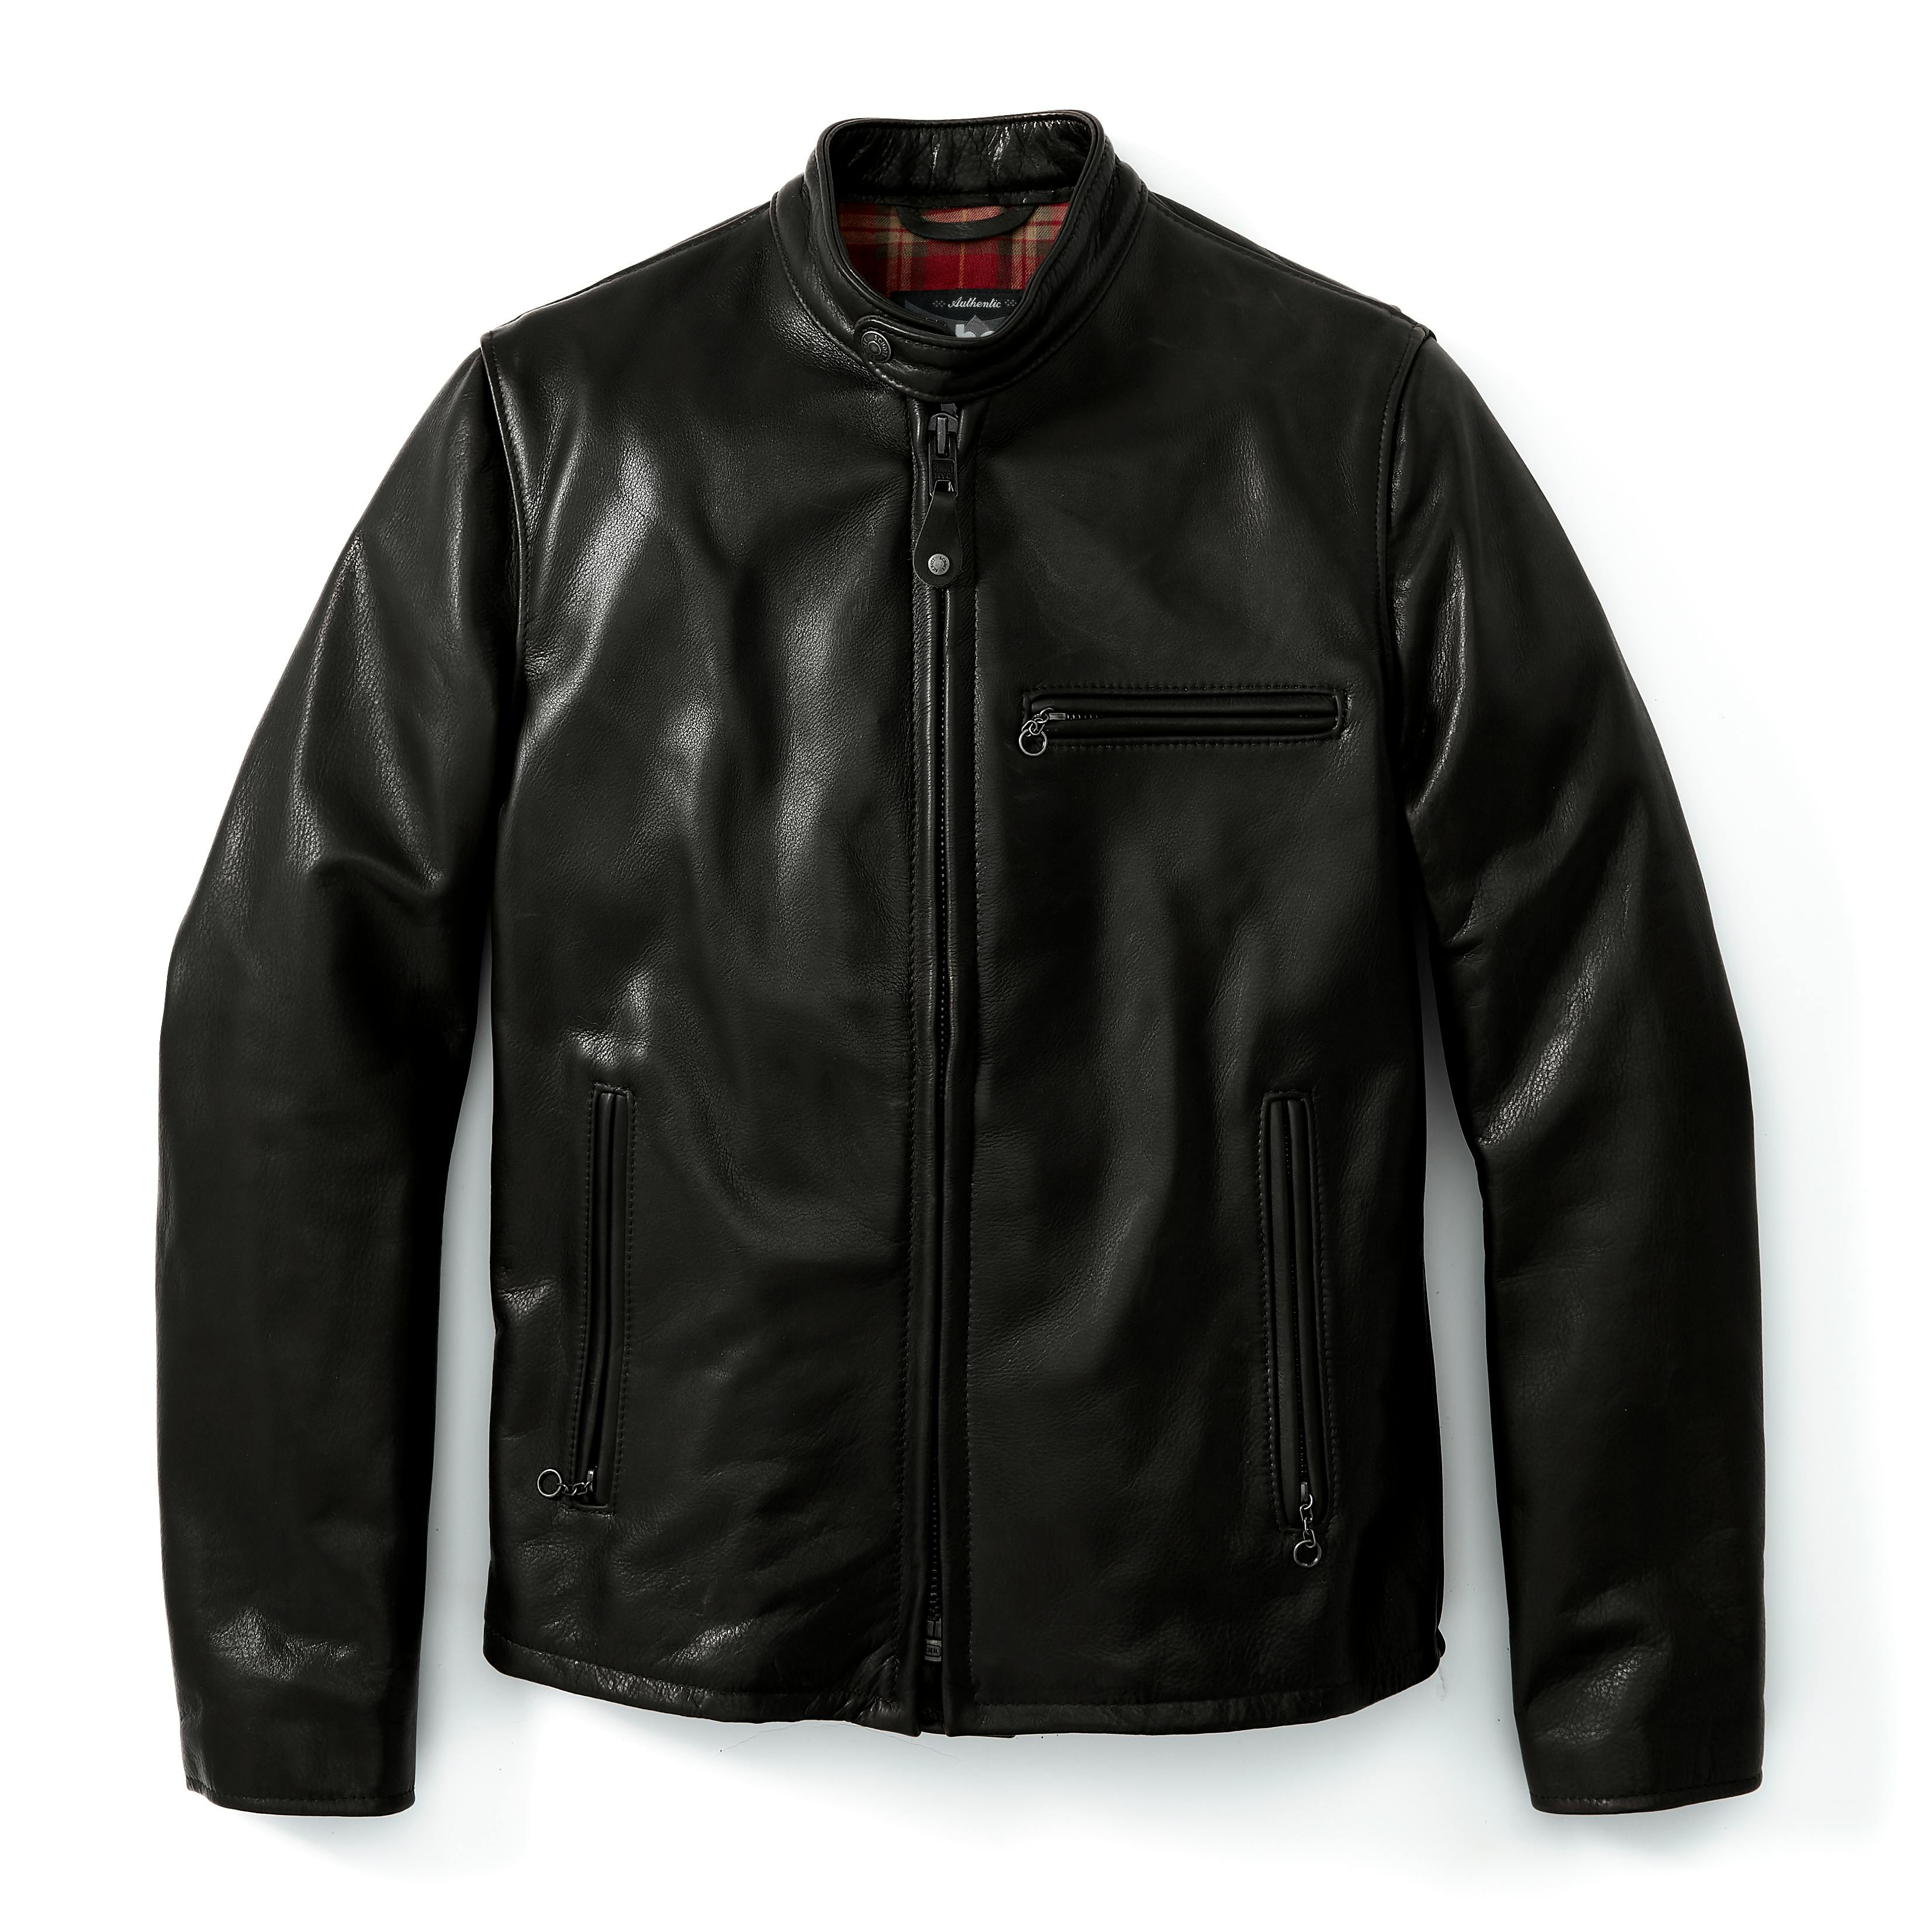 Jacket Hunt Cafe Racer Motorcycle Leather Jacket